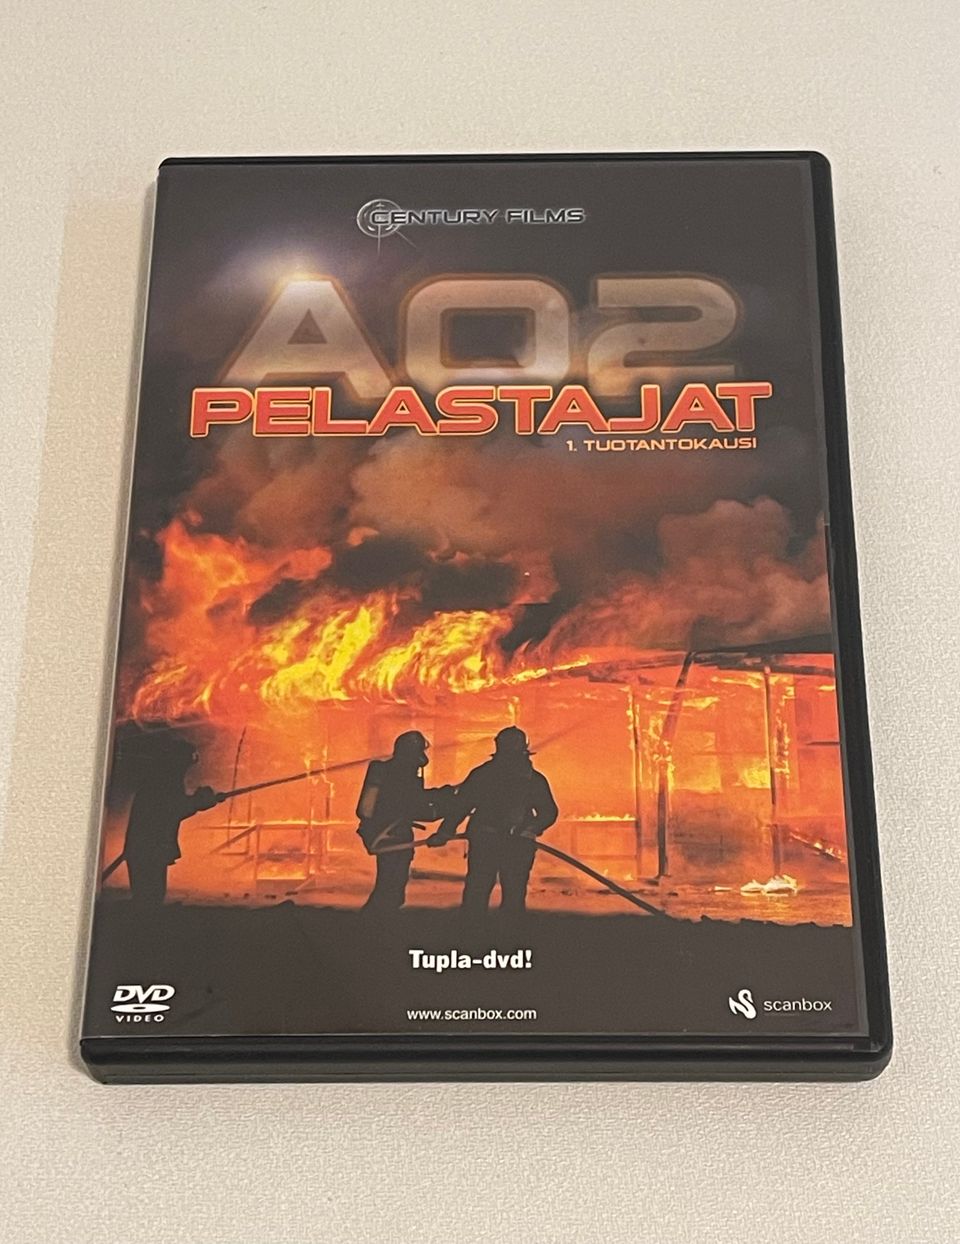 Pelastajat -dokumenttisarja (DVD)